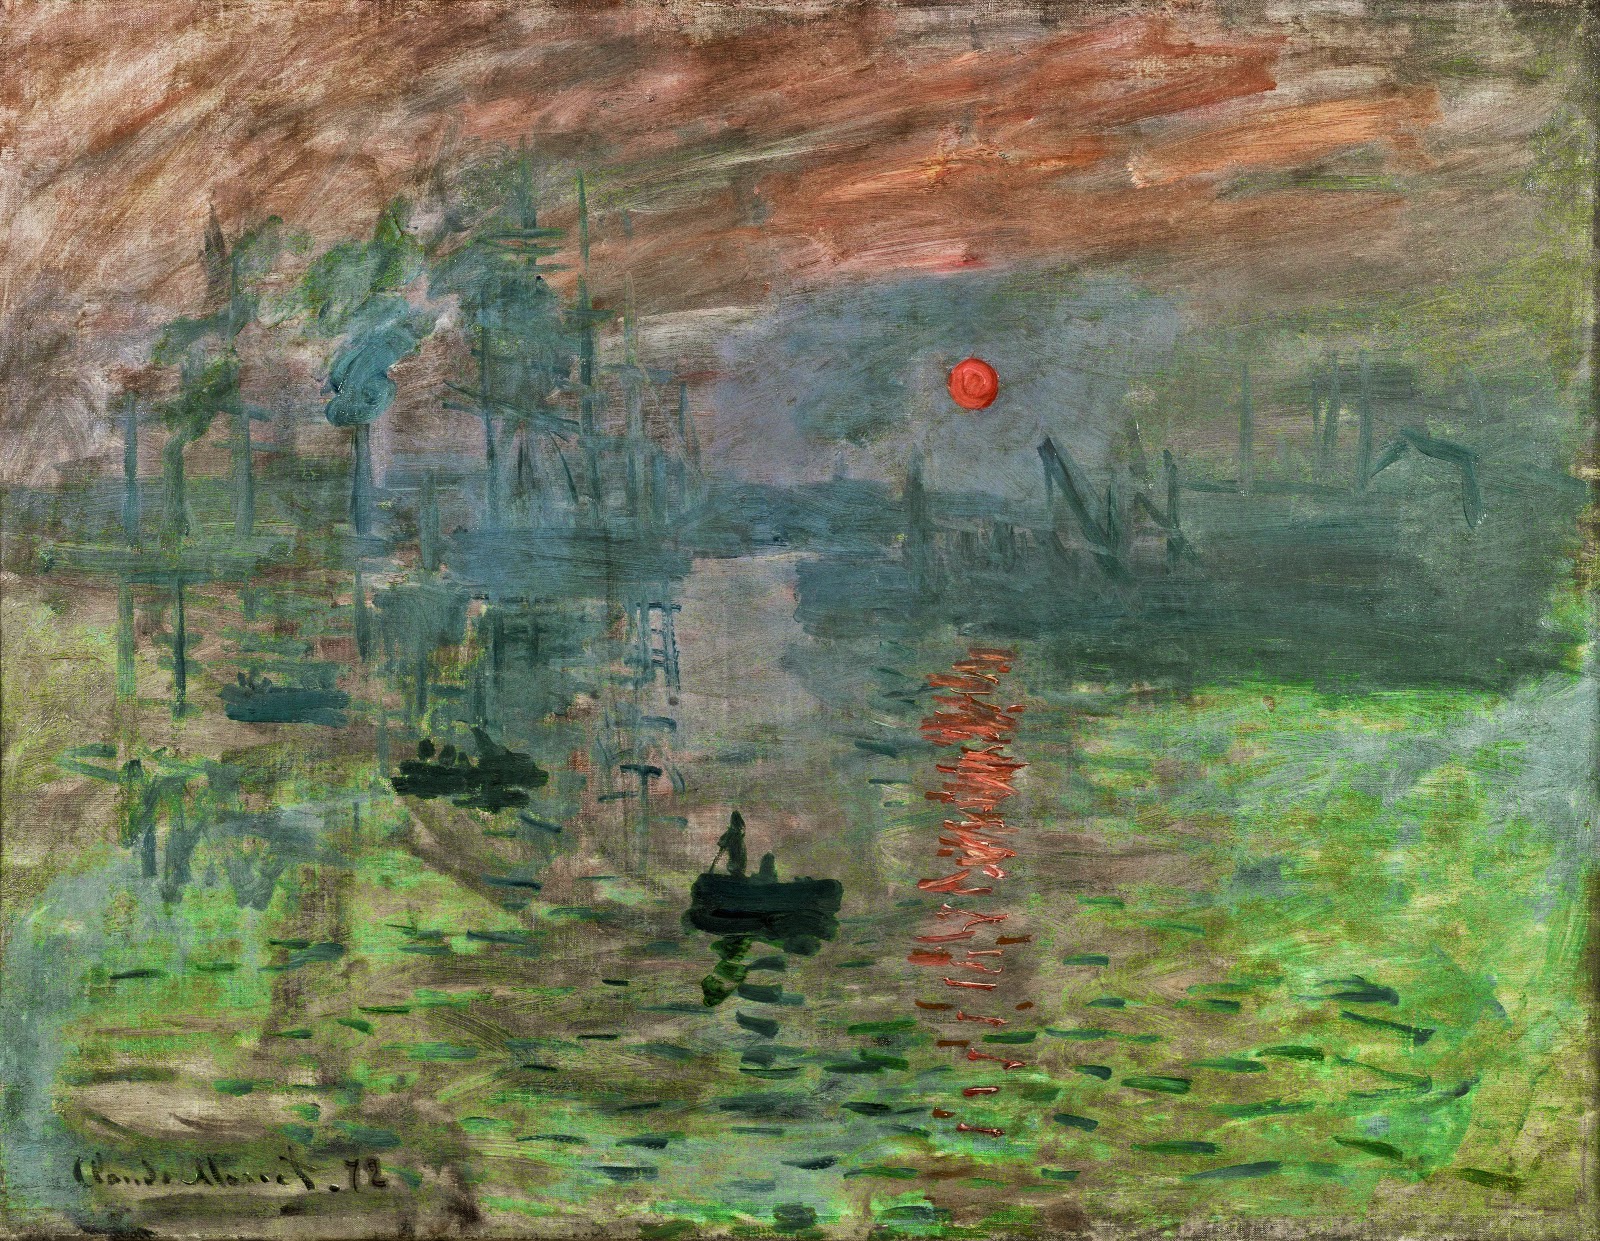 Claude+Monet-1840-1926 (520).jpg